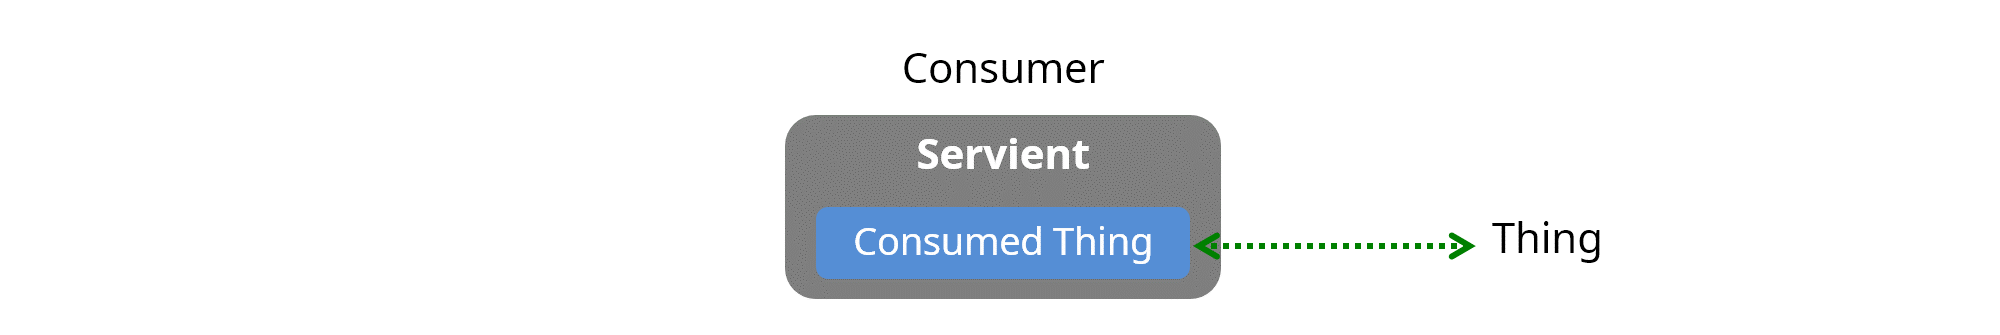 servient as a consumer